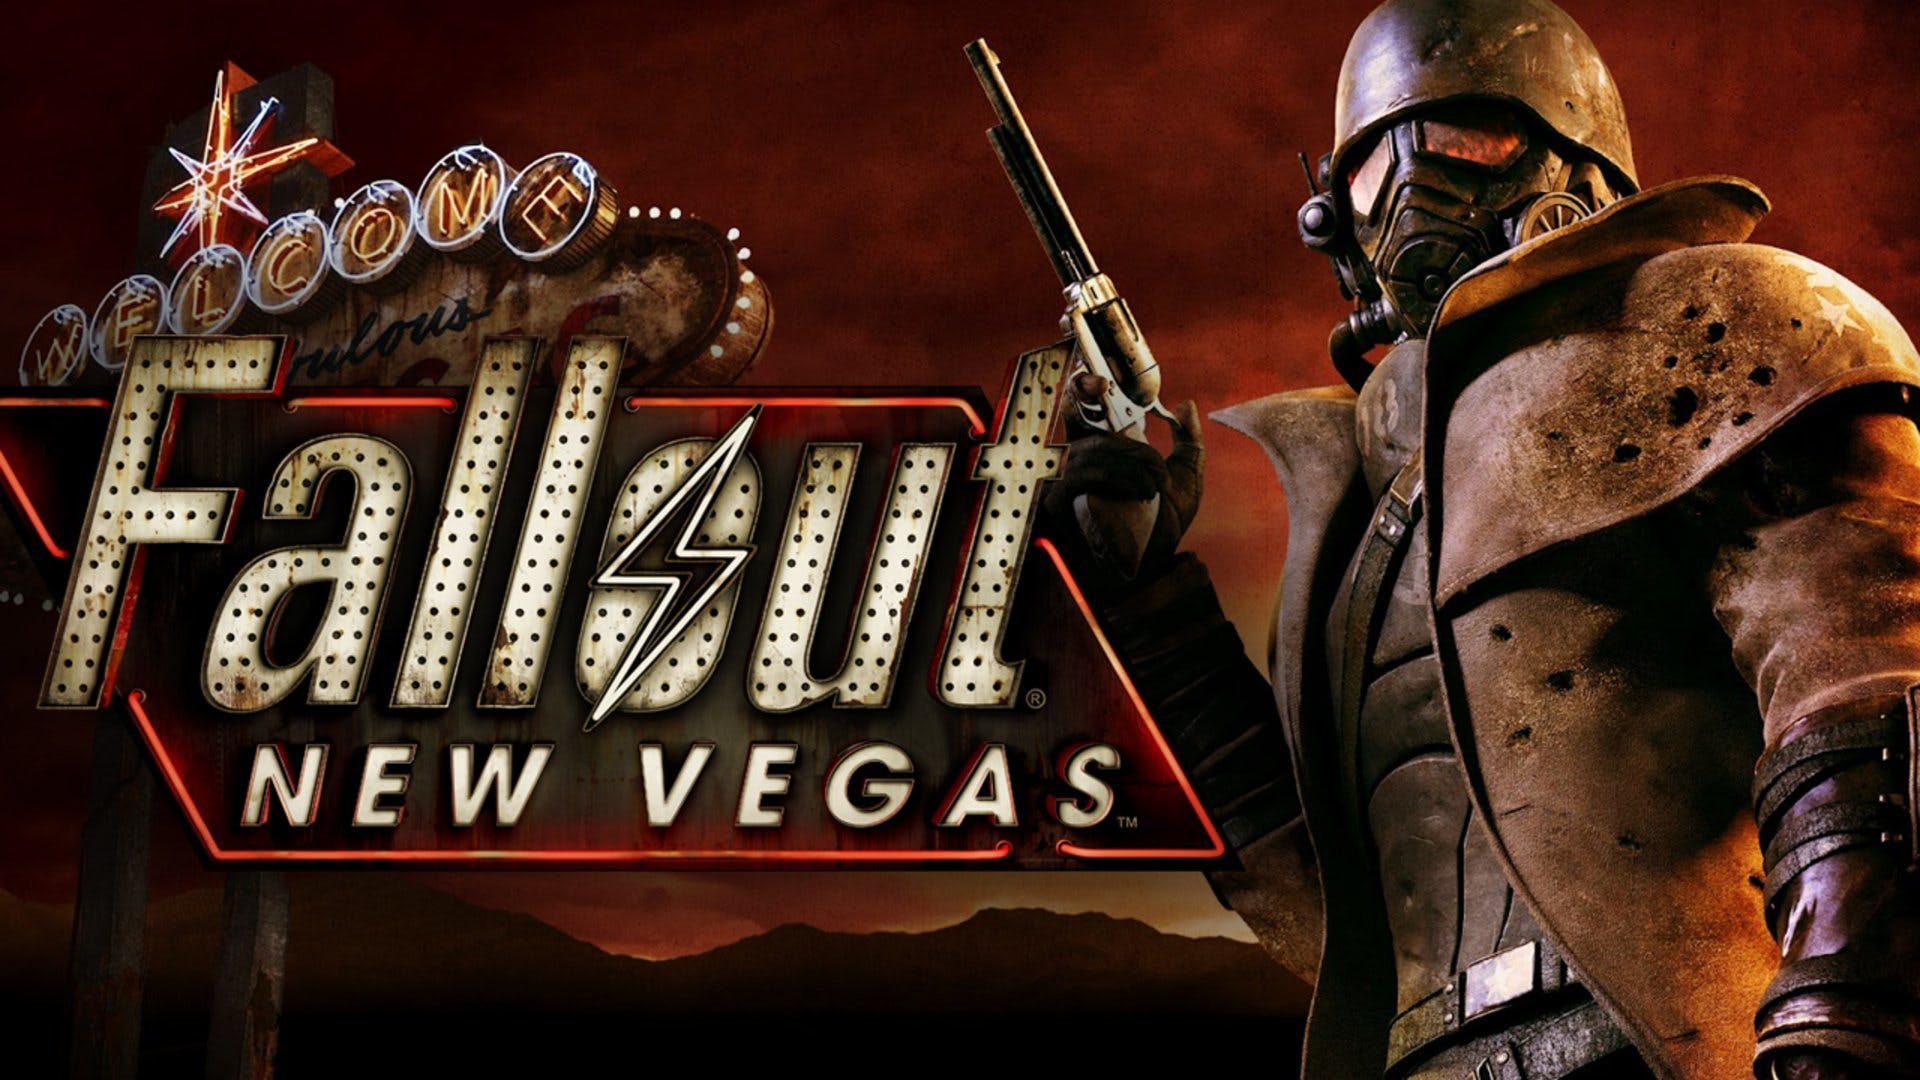 Fallout New Vegas - Ultimate Edition (2012) - День 5 (Slow Run)  - Part 4